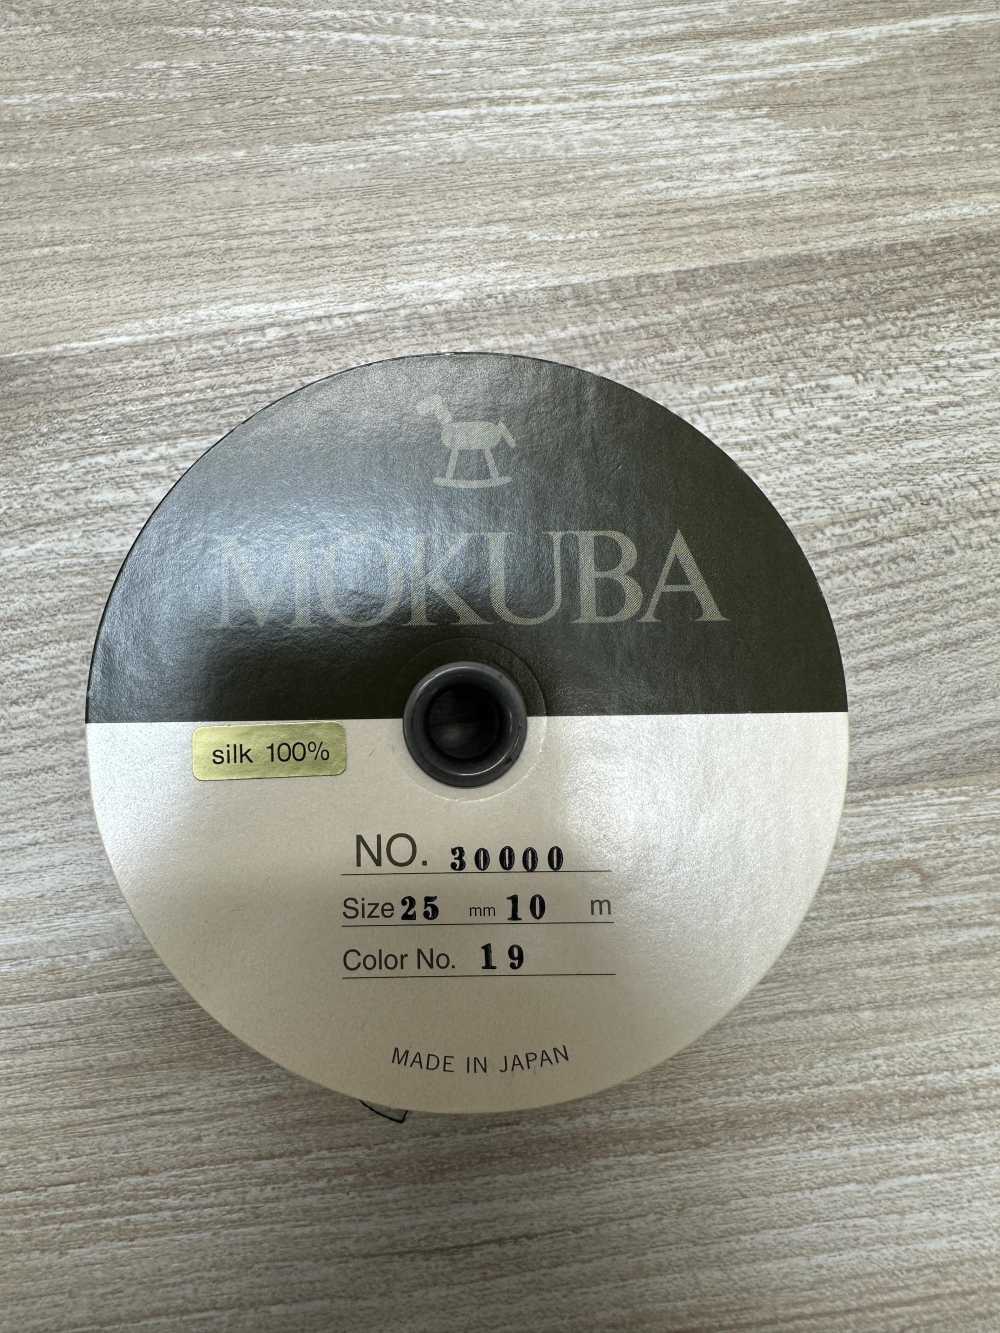 30000 MOKUBA Seidensatinband [Outlet][Bandbandschnur] Mokuba